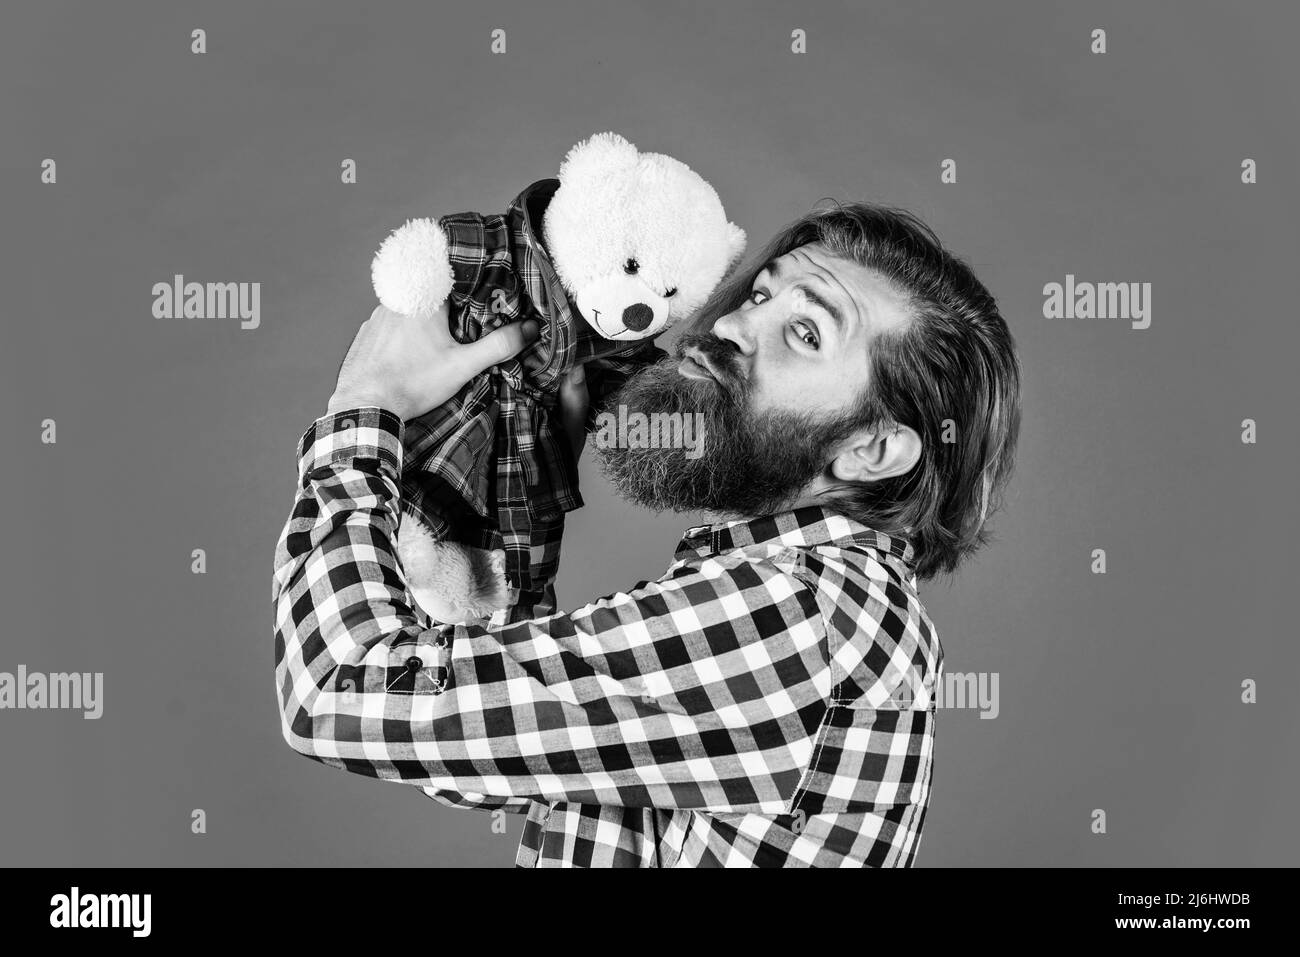 brutal bearded man wear checkered shirt having lush beard and moustache kiss teddy bear toy, love Stock Photo